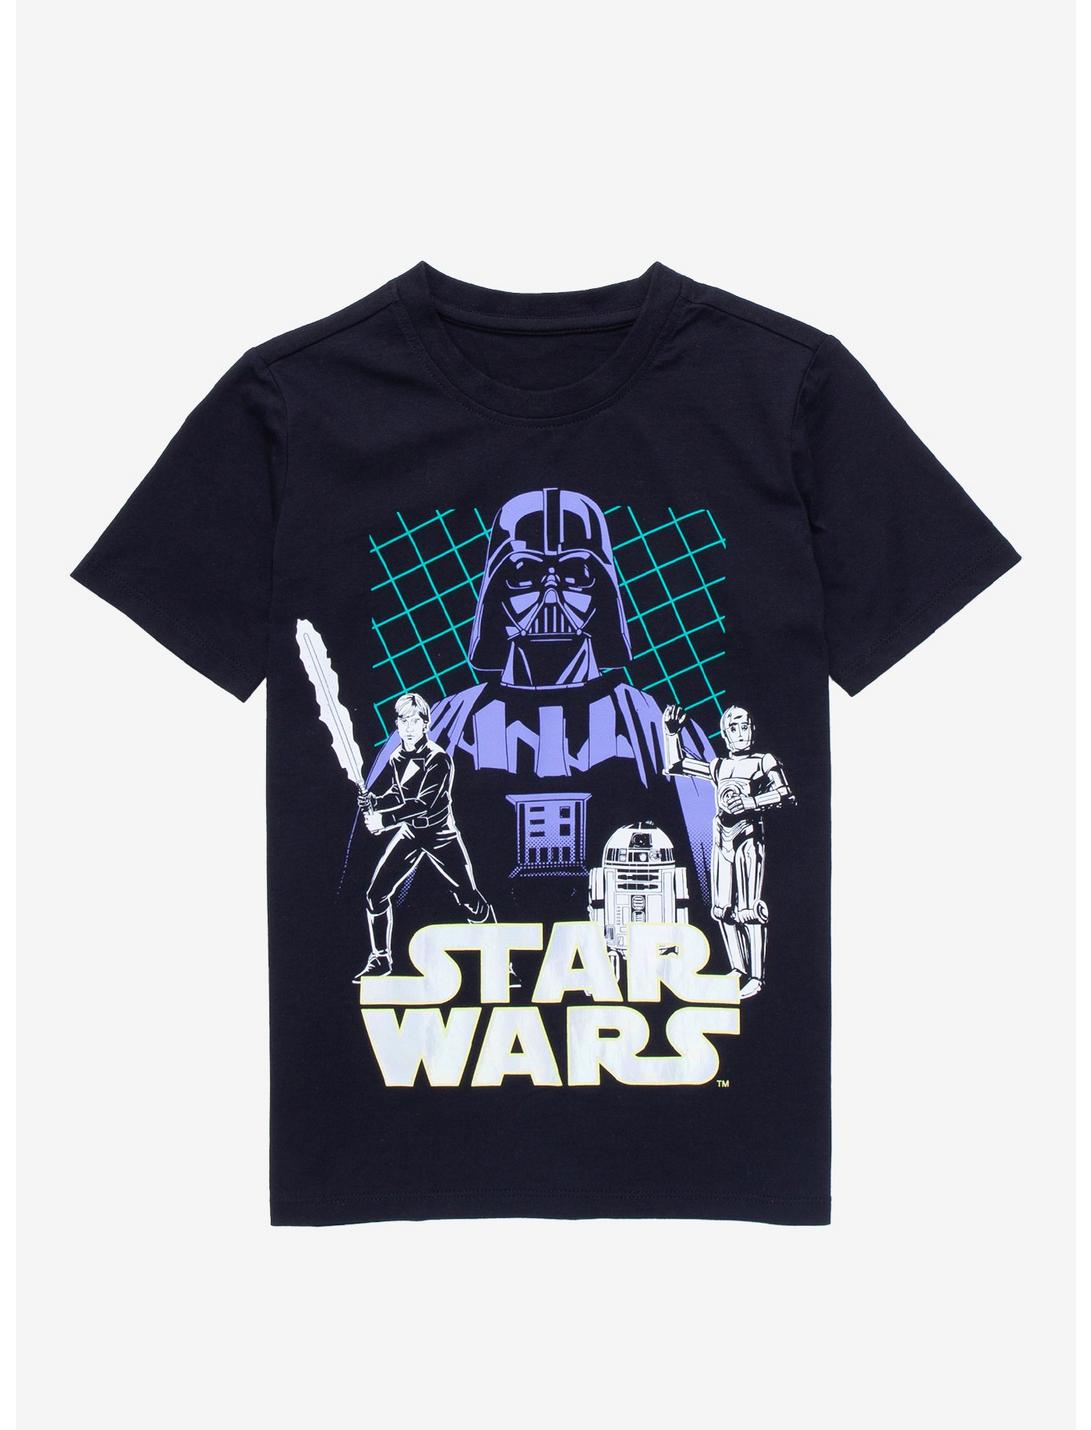 Star Wars Darth Vader Youth T-Shirt - BoxLunch Exclusive, BLACK, hi-res